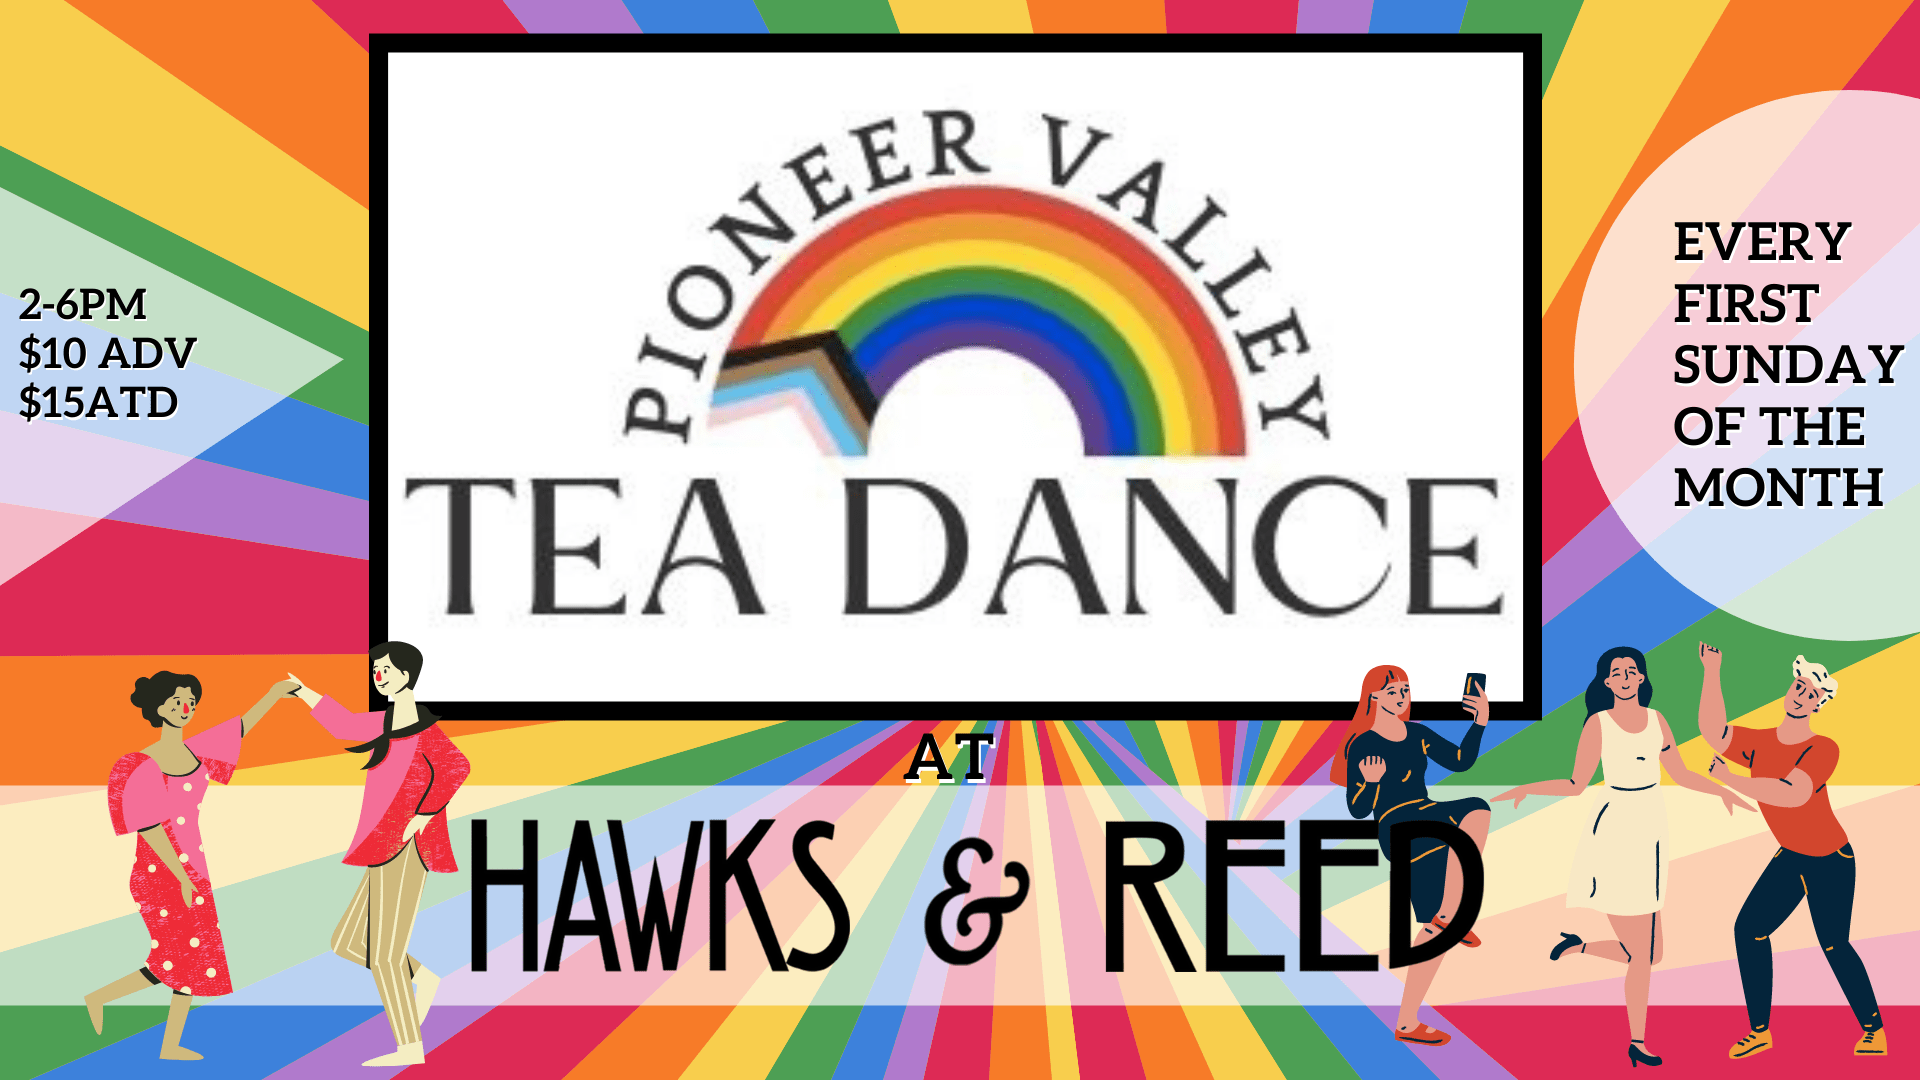 Pioneer Valley Tea Dance at Hawks and Reed!